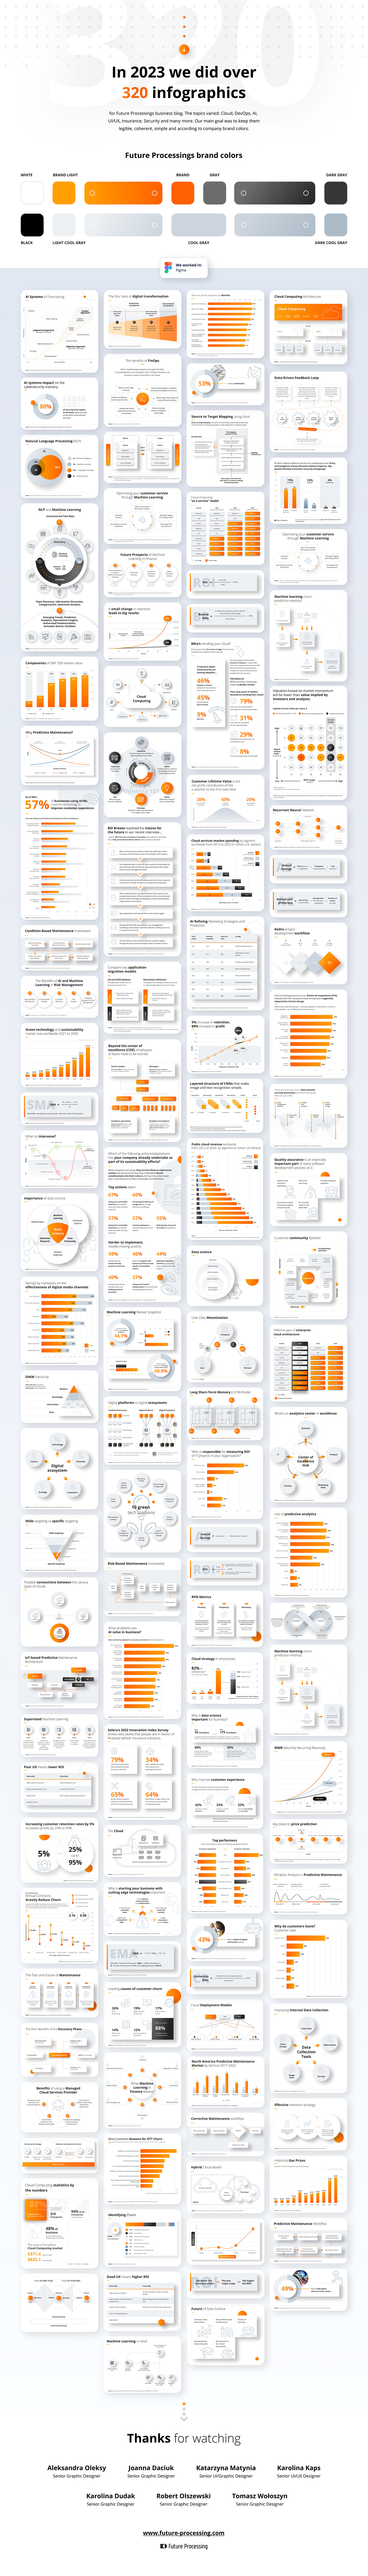 infographic data visualization information design Social media post Socialmedia Charts Graphs annual report Corporate Identity Brand Design